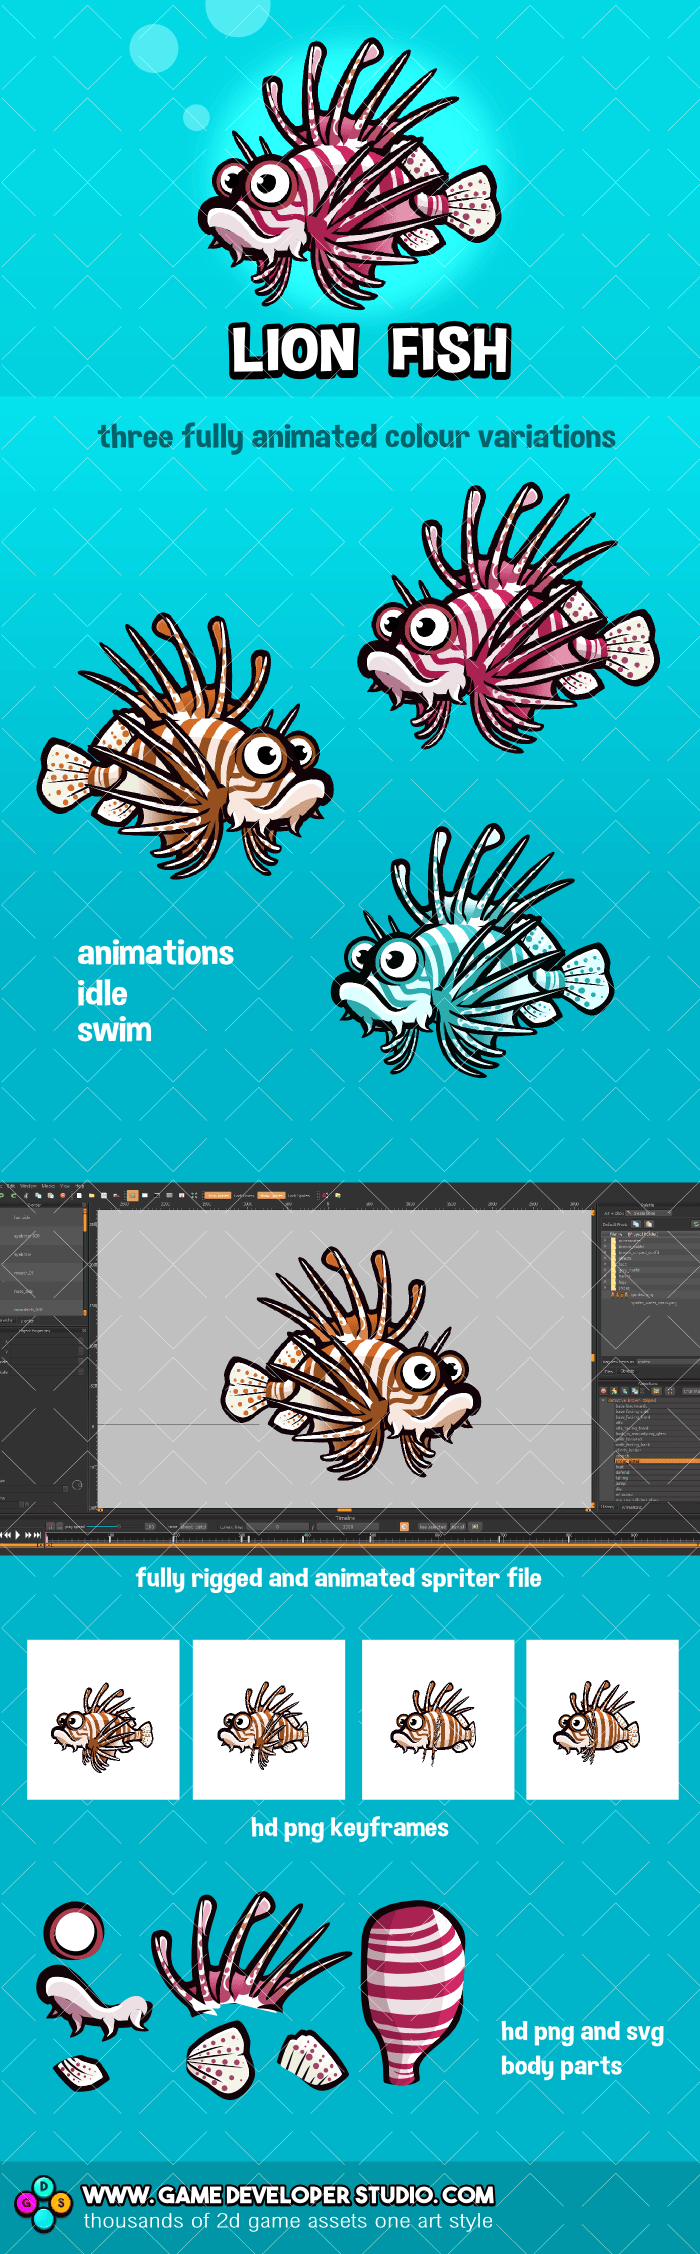 Animated lion fish game asset